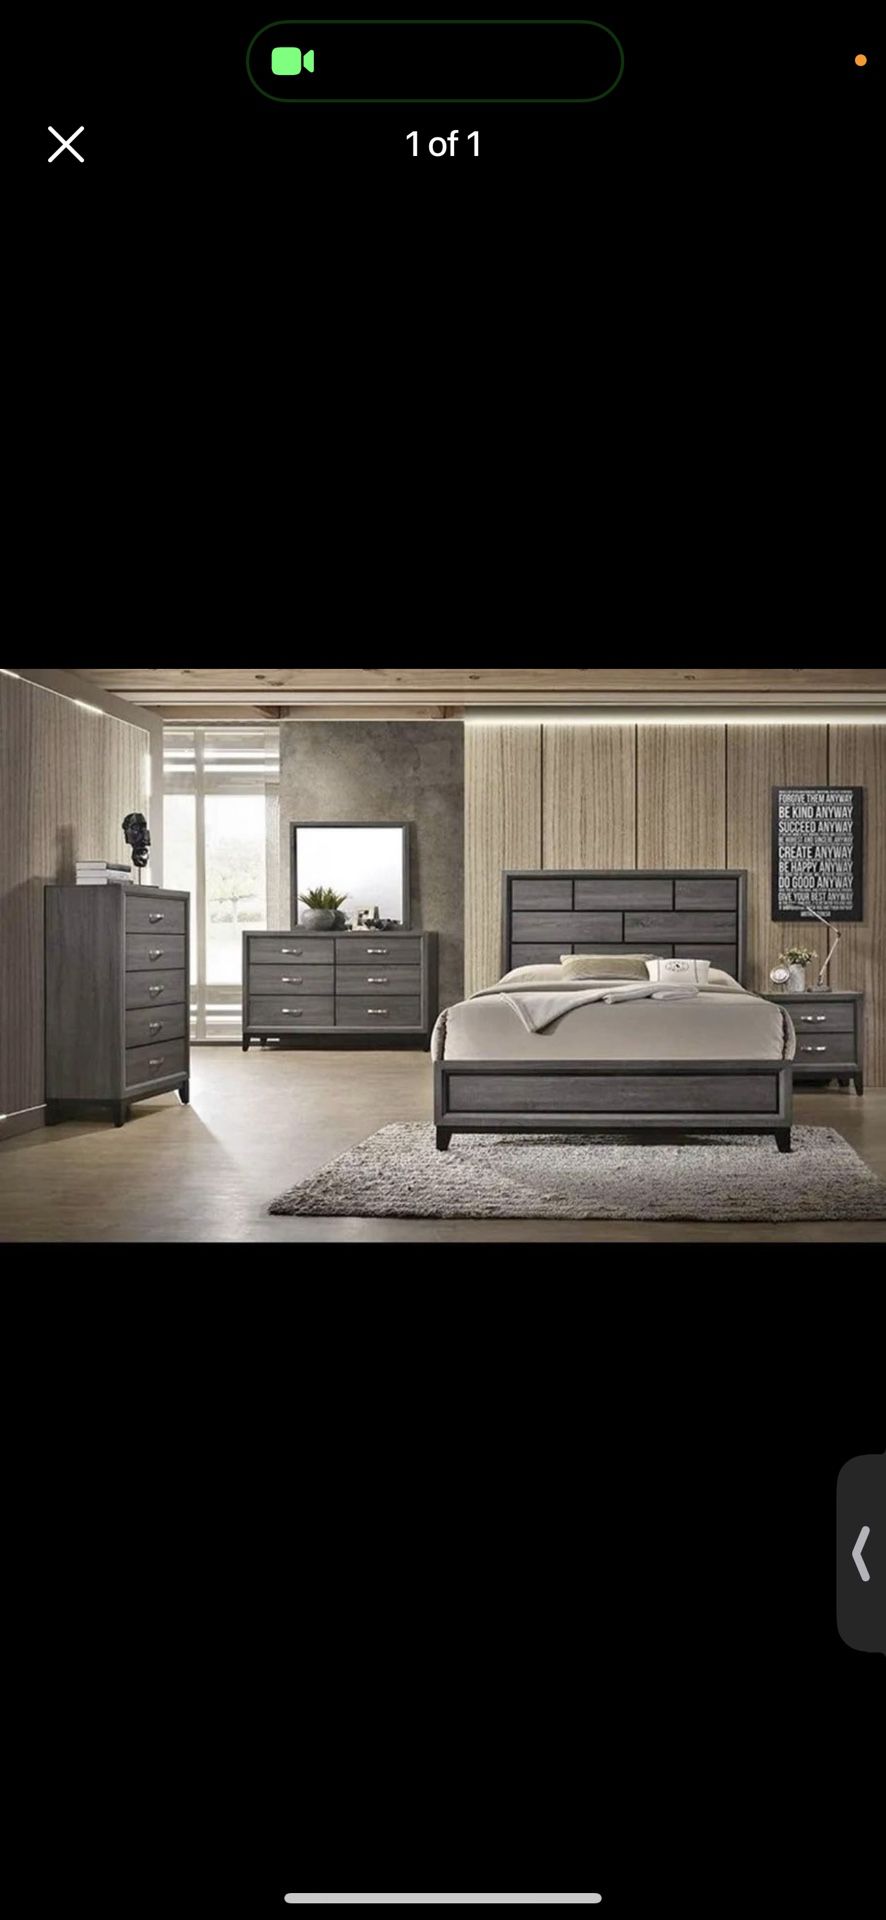 Brand New Complete Bedroom Set for $799!!!